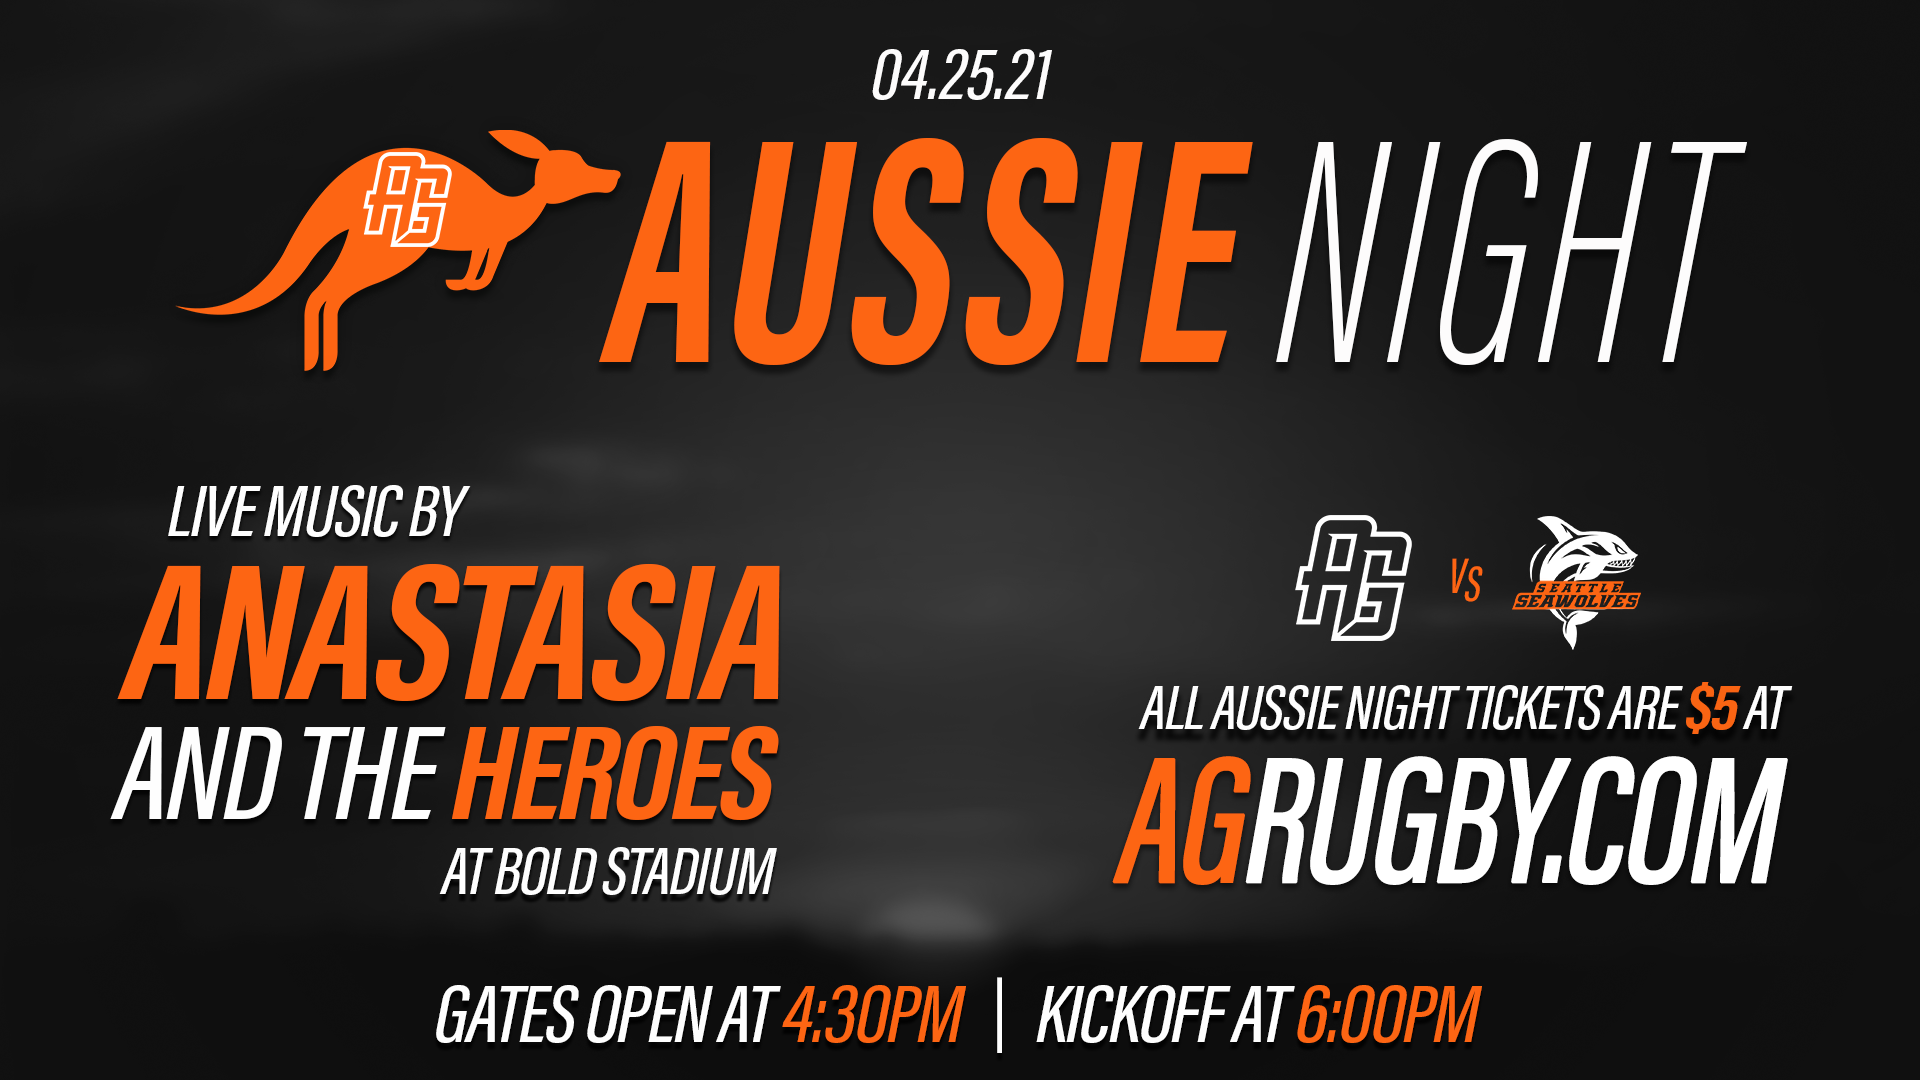 Aussie Night Special Ticket Promotion – All Tickets $5!